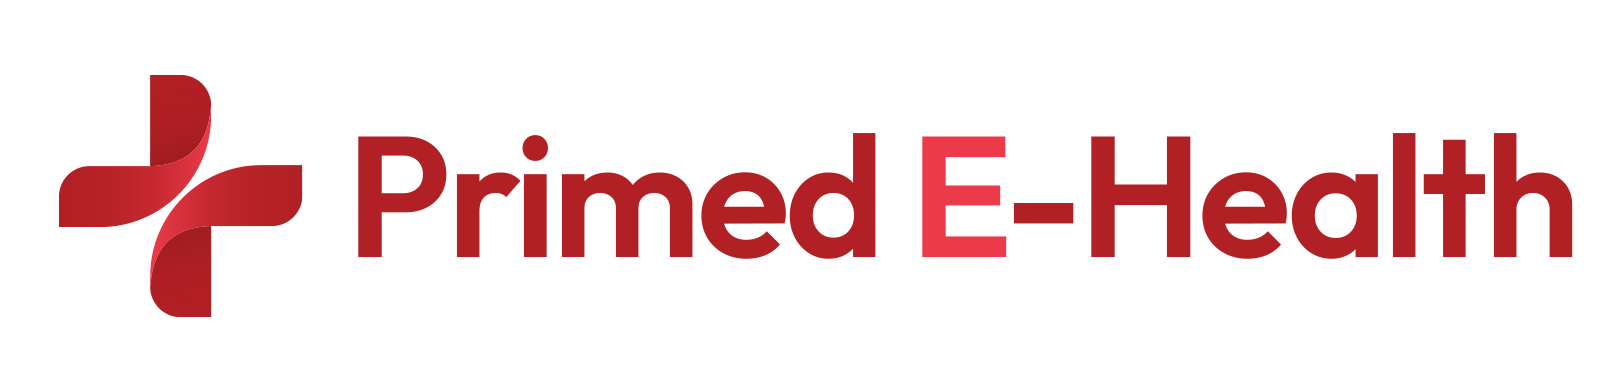 Primed E-Health